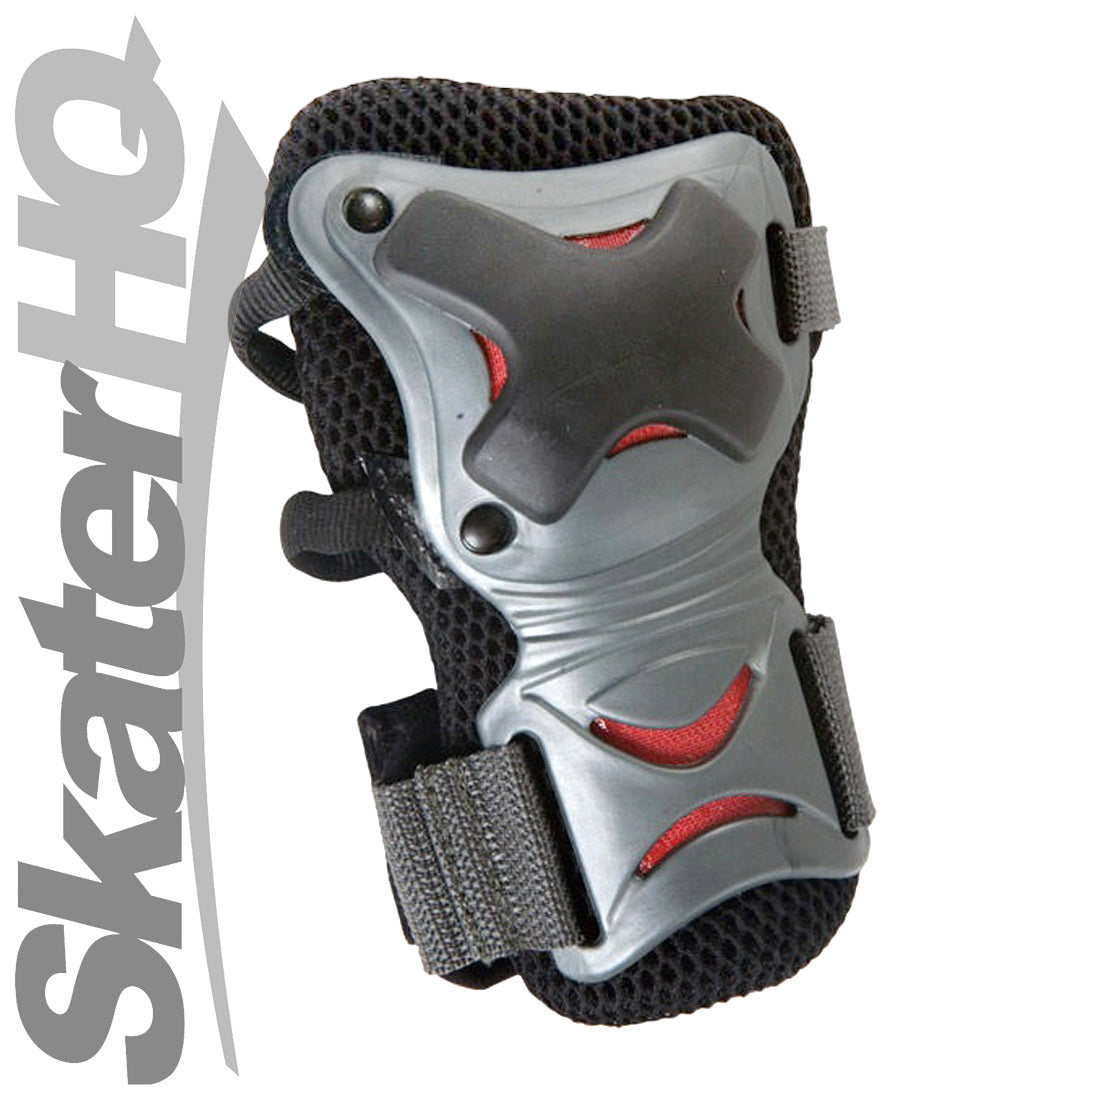 Seba Wrist Guards - XLarge Protective Gear